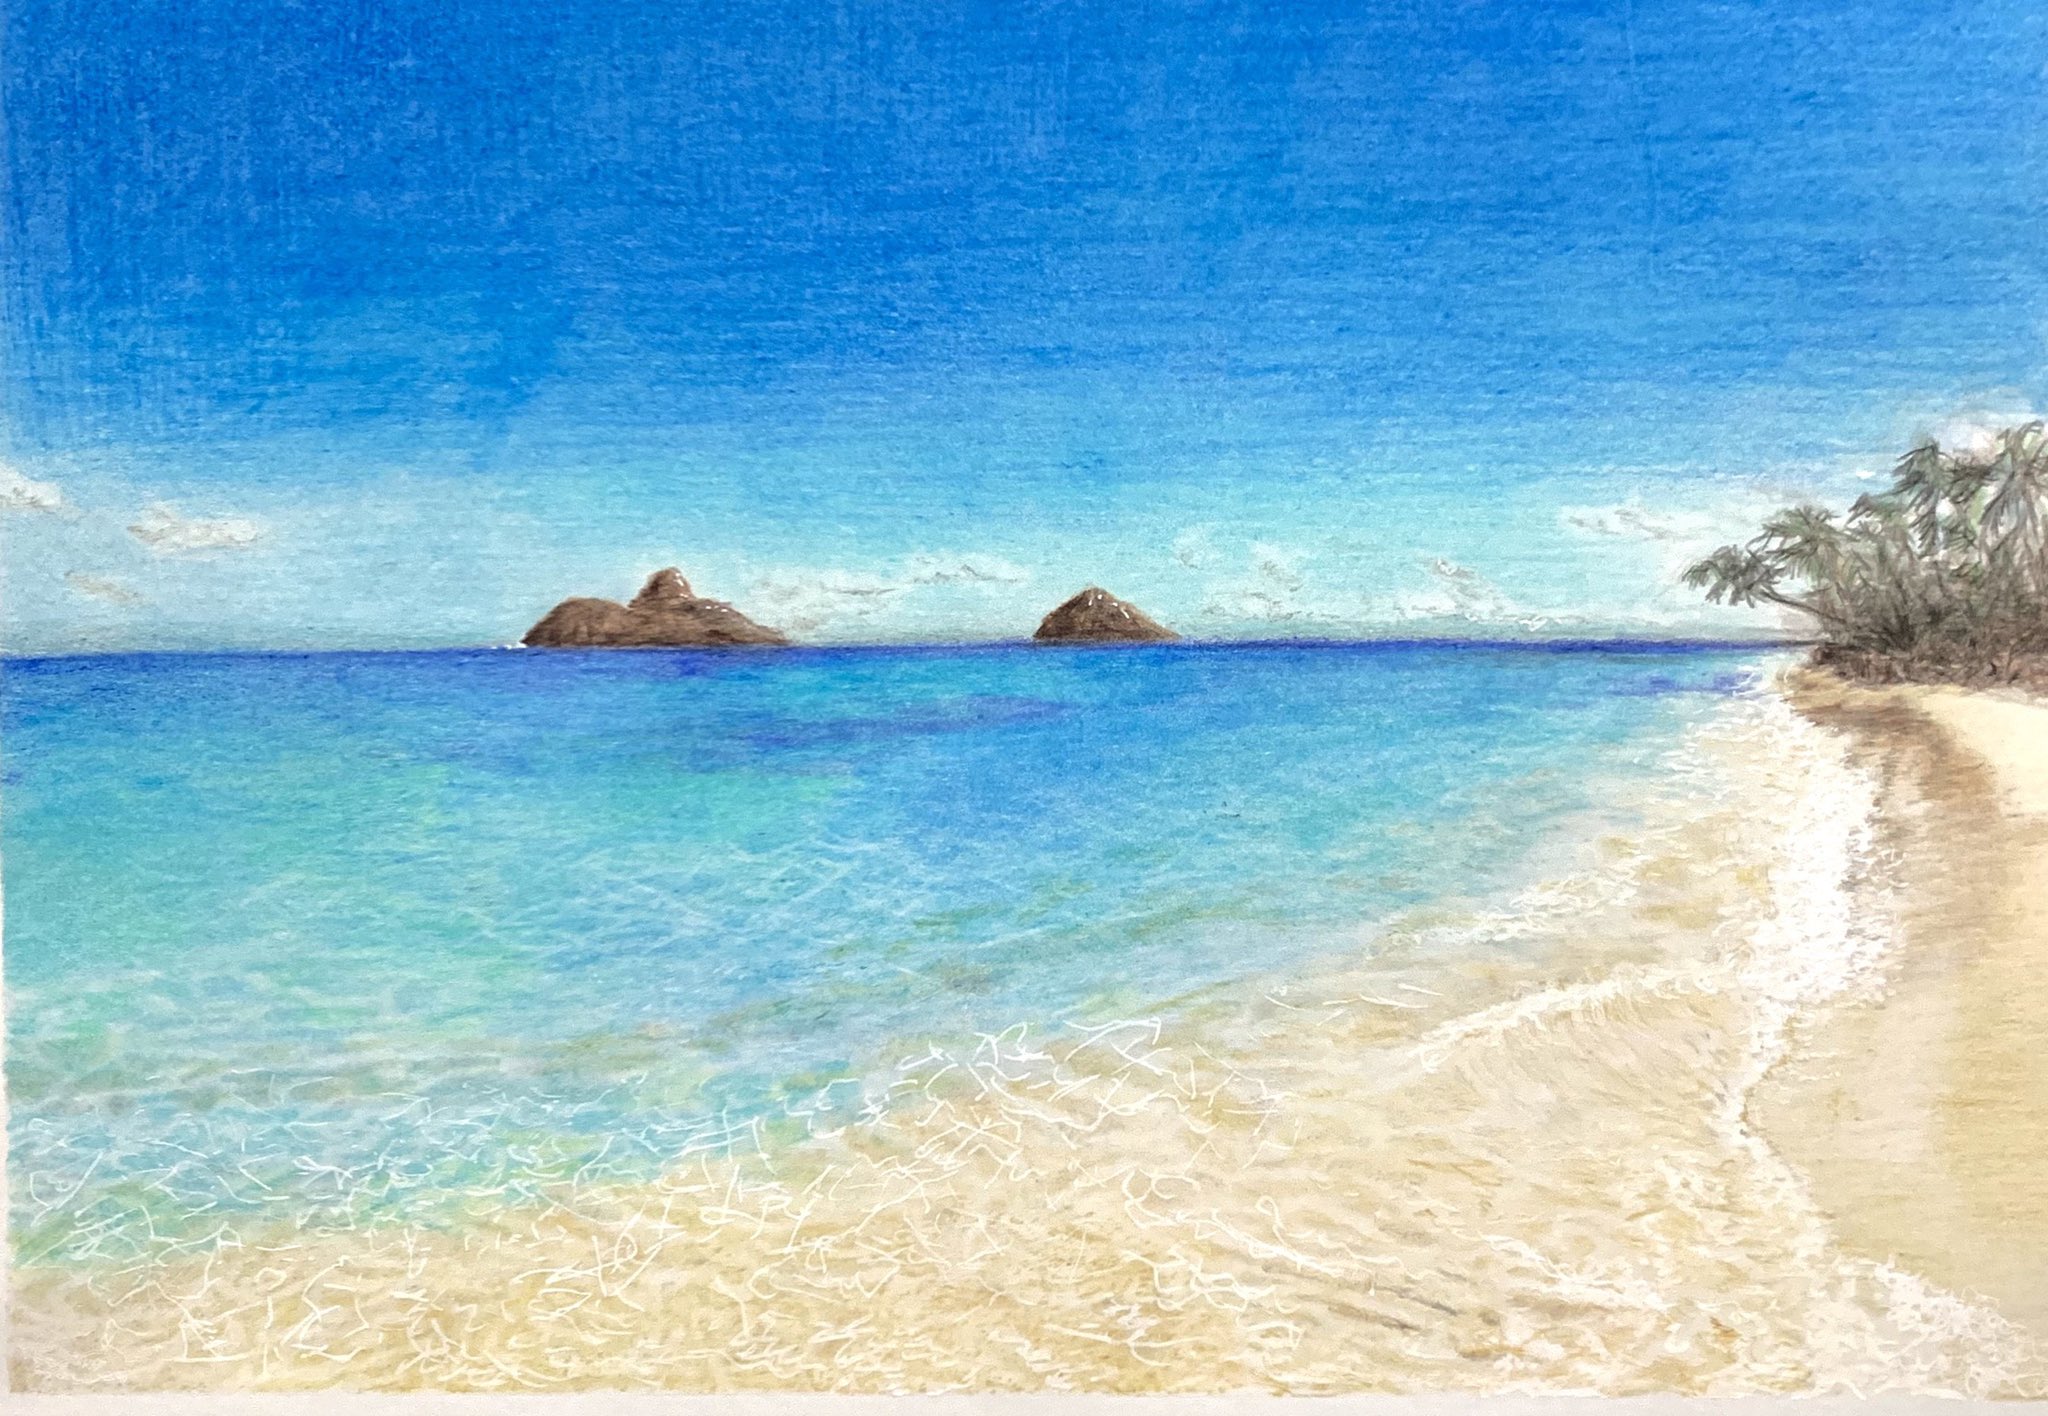 ট ইট র いとしん 空がヘタ過ぎて 泣 色鉛筆 色鉛筆画 風景 アナログイラスト ビーチ Hawaii Kailua 海 波 T Co Fj2lqifm9c ট ইট র